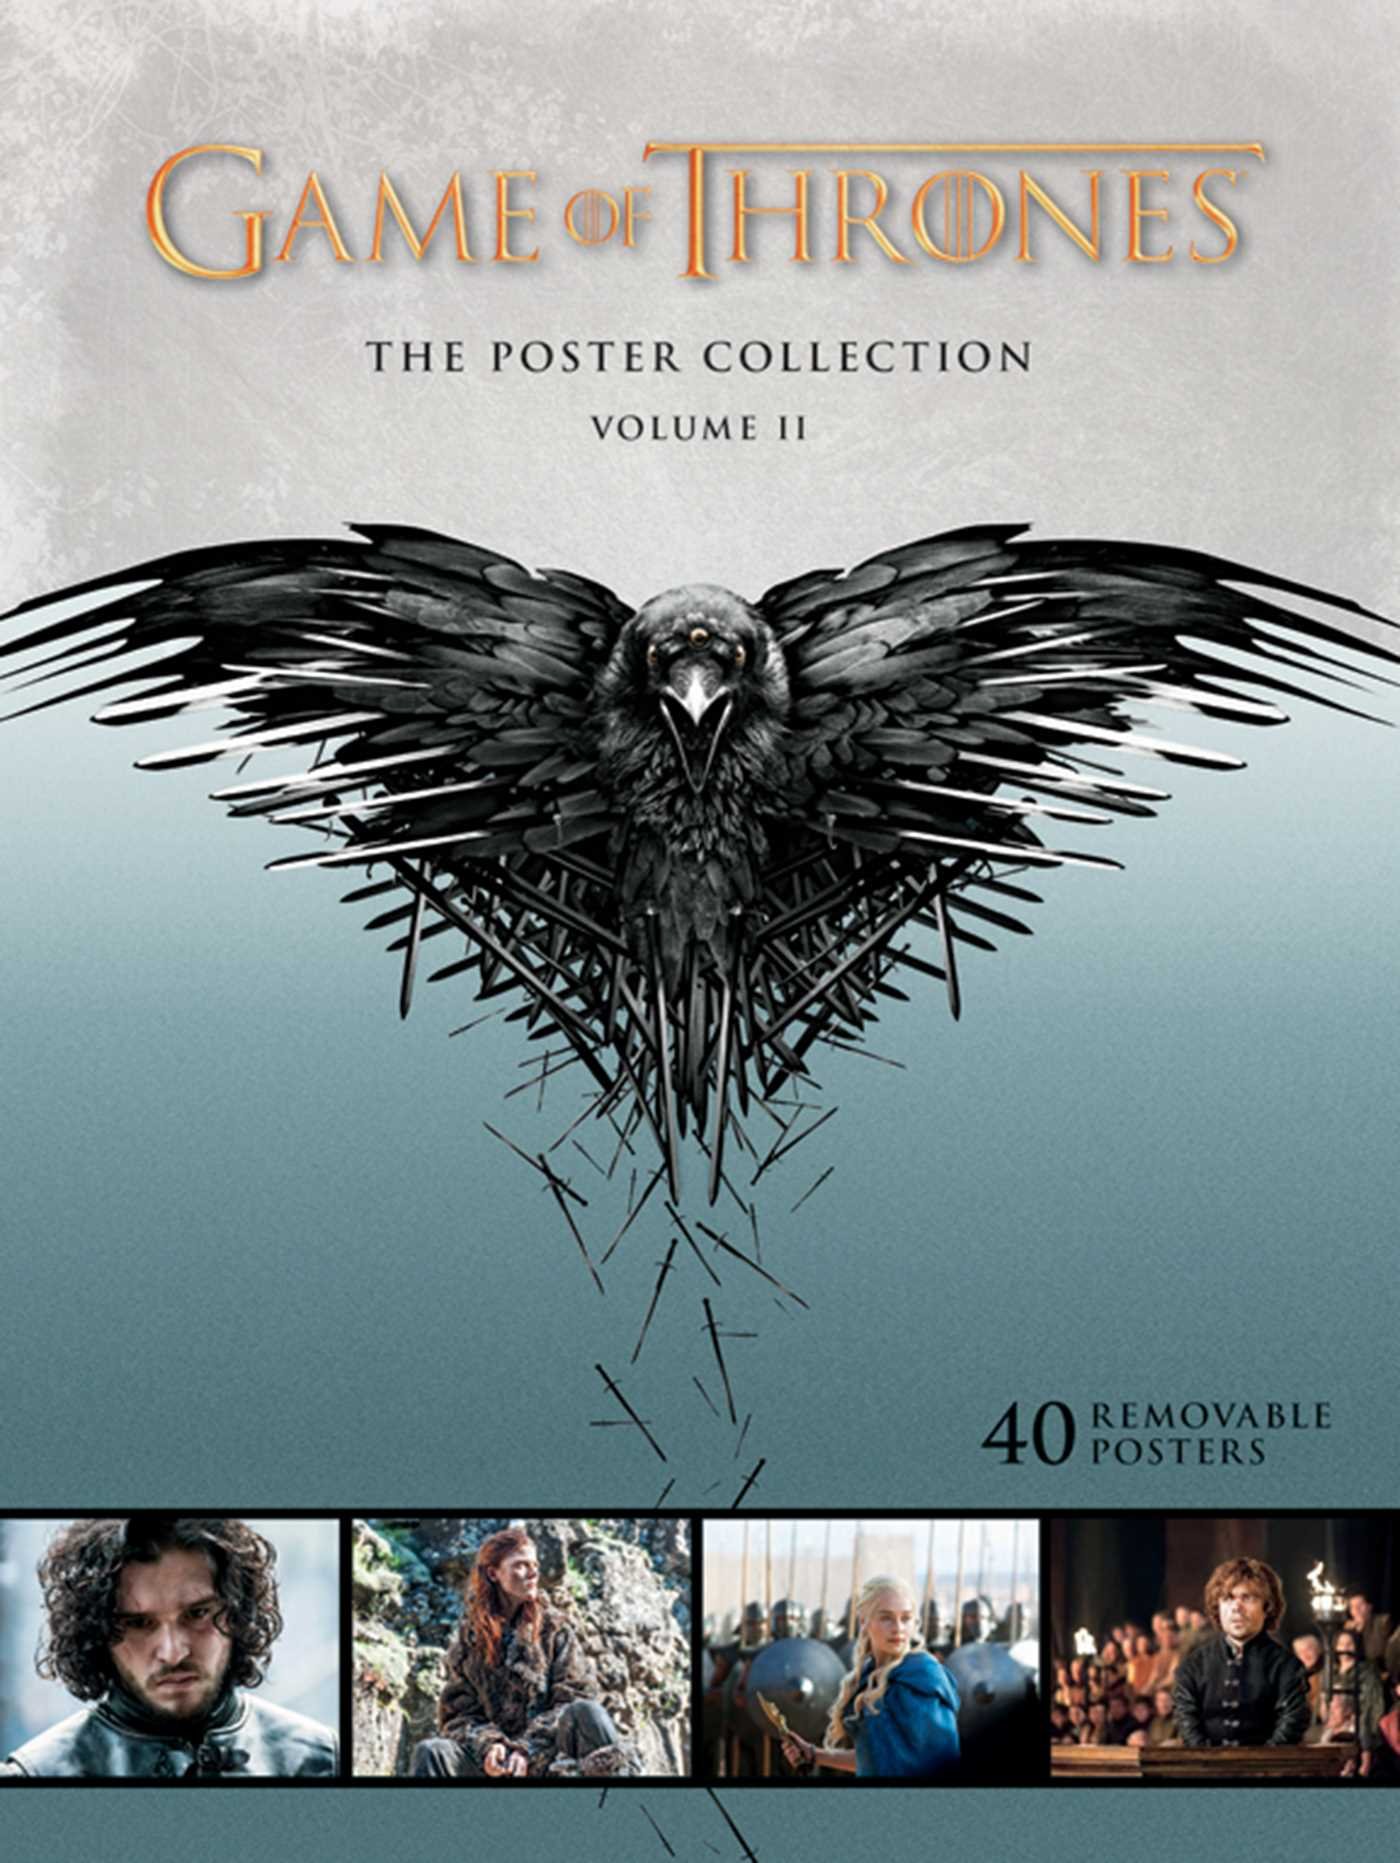 【外文书店】权利的游戏 海报集 英文原版 冰与火之歌 Game of Thrones: The Poster Collection, Volume II 原版进口图书籍